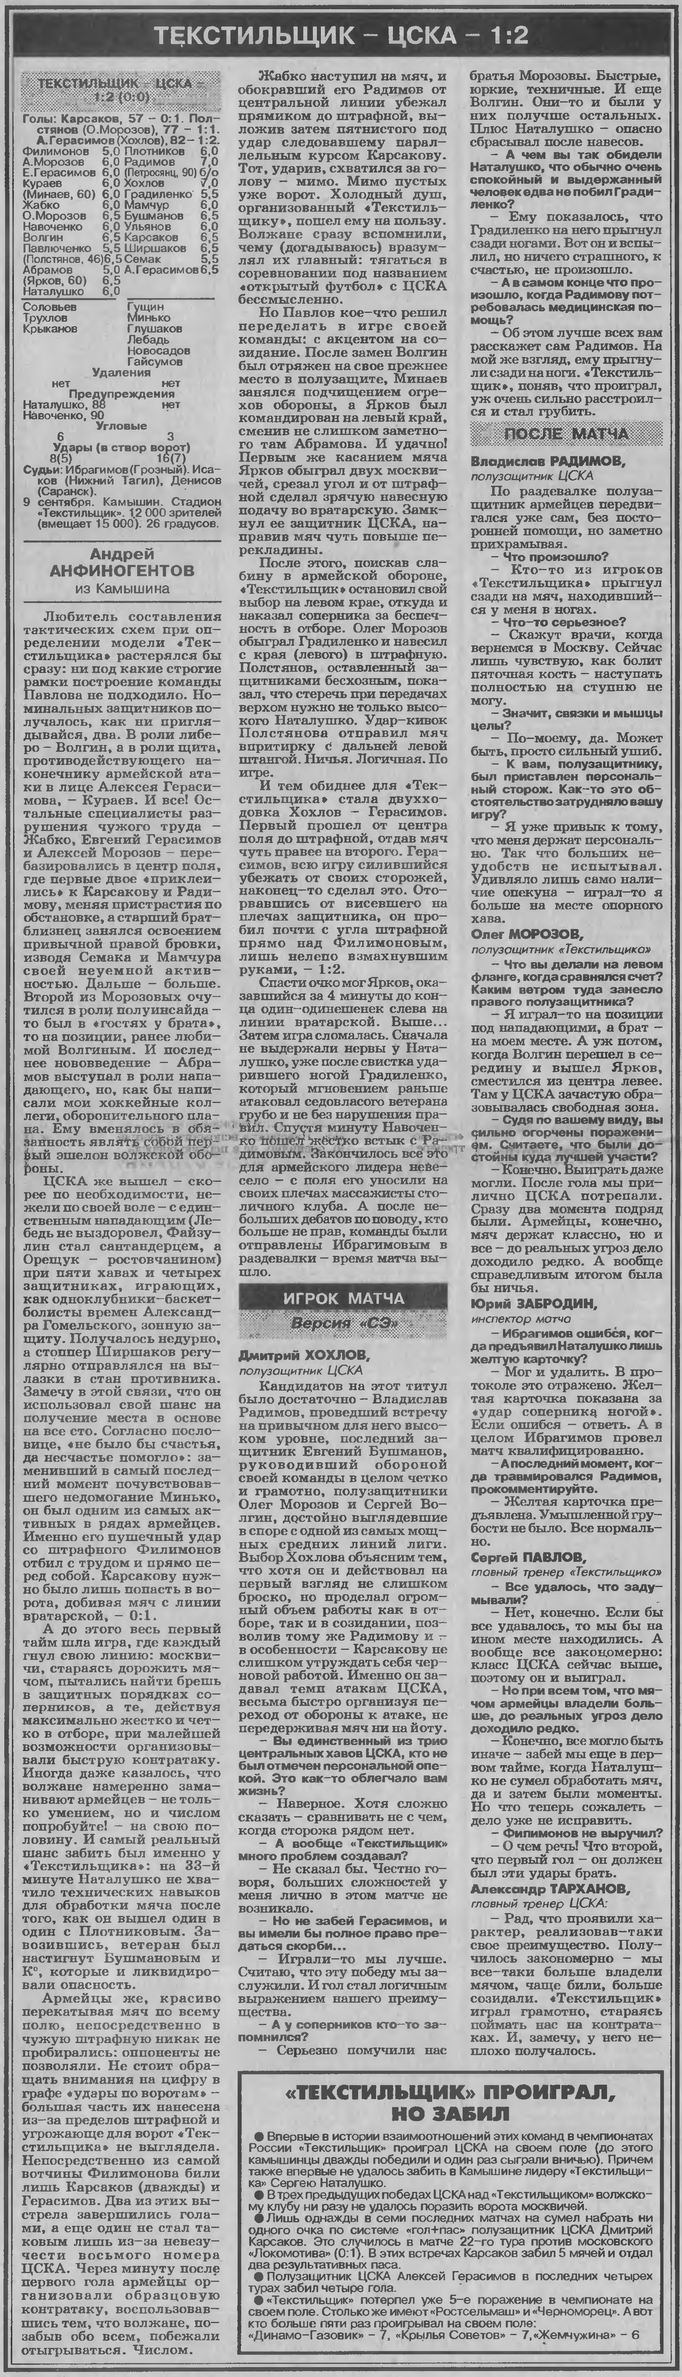 1995-09-09.Tekstilschik-CSKA.1